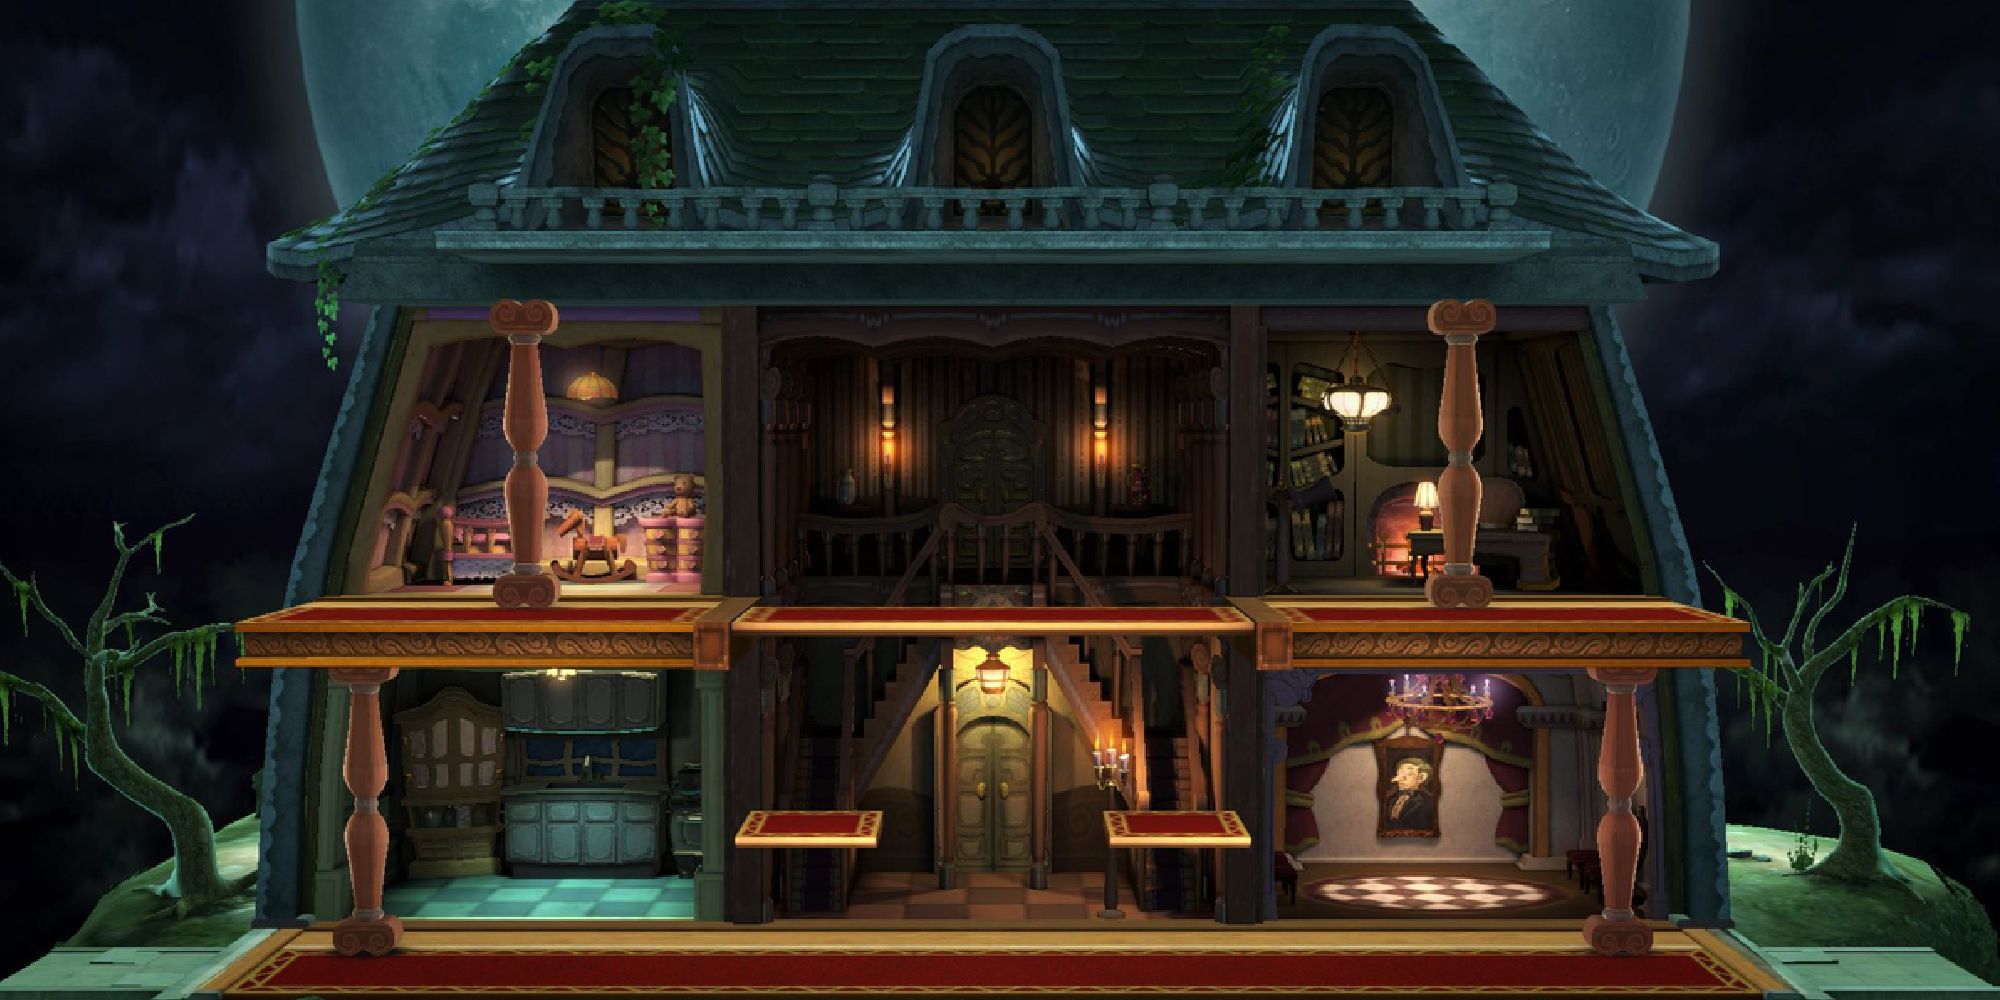 The Luigi's Mansion stage in Super Smash Bros Ultimate